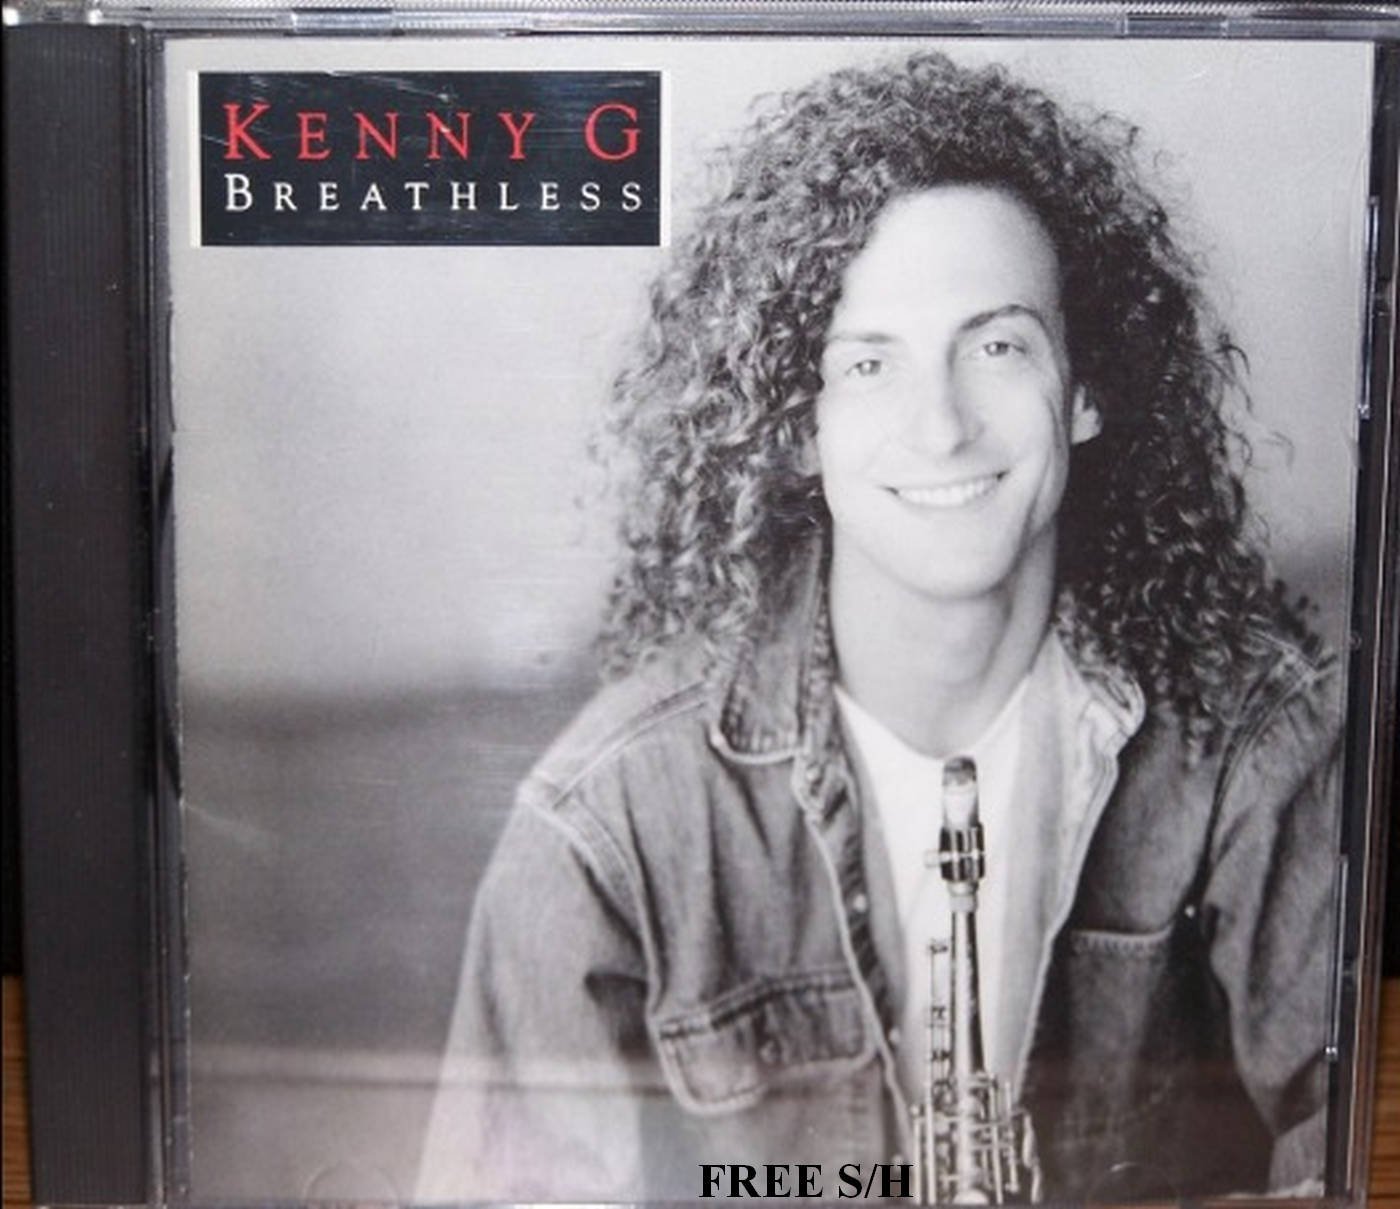 kenny g breathless album for sale